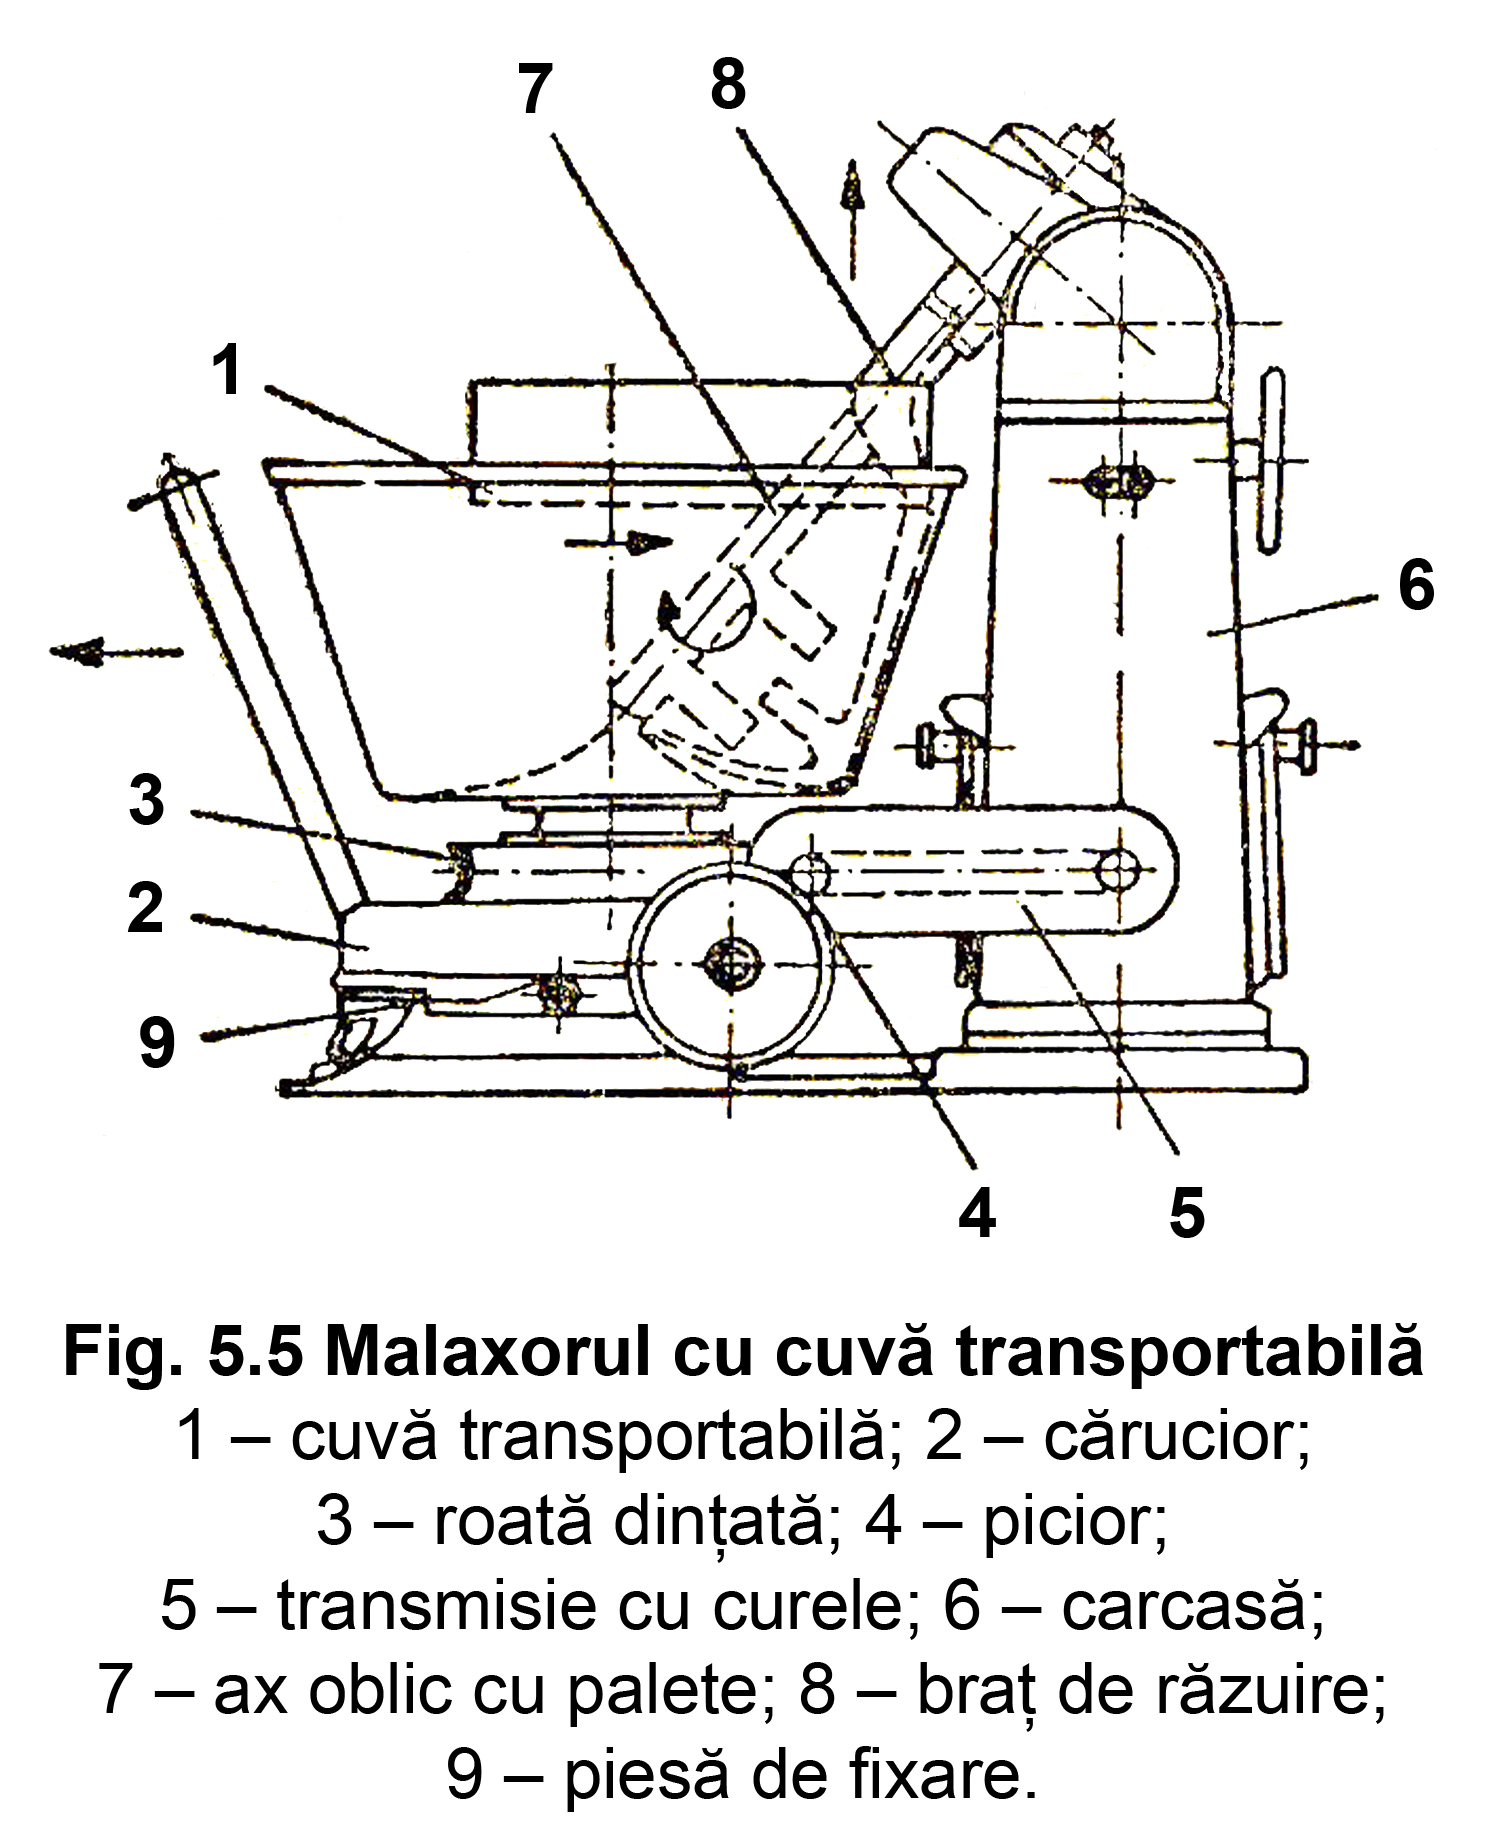 Fig. 5.5 Malaxorul cu cuva transportabila